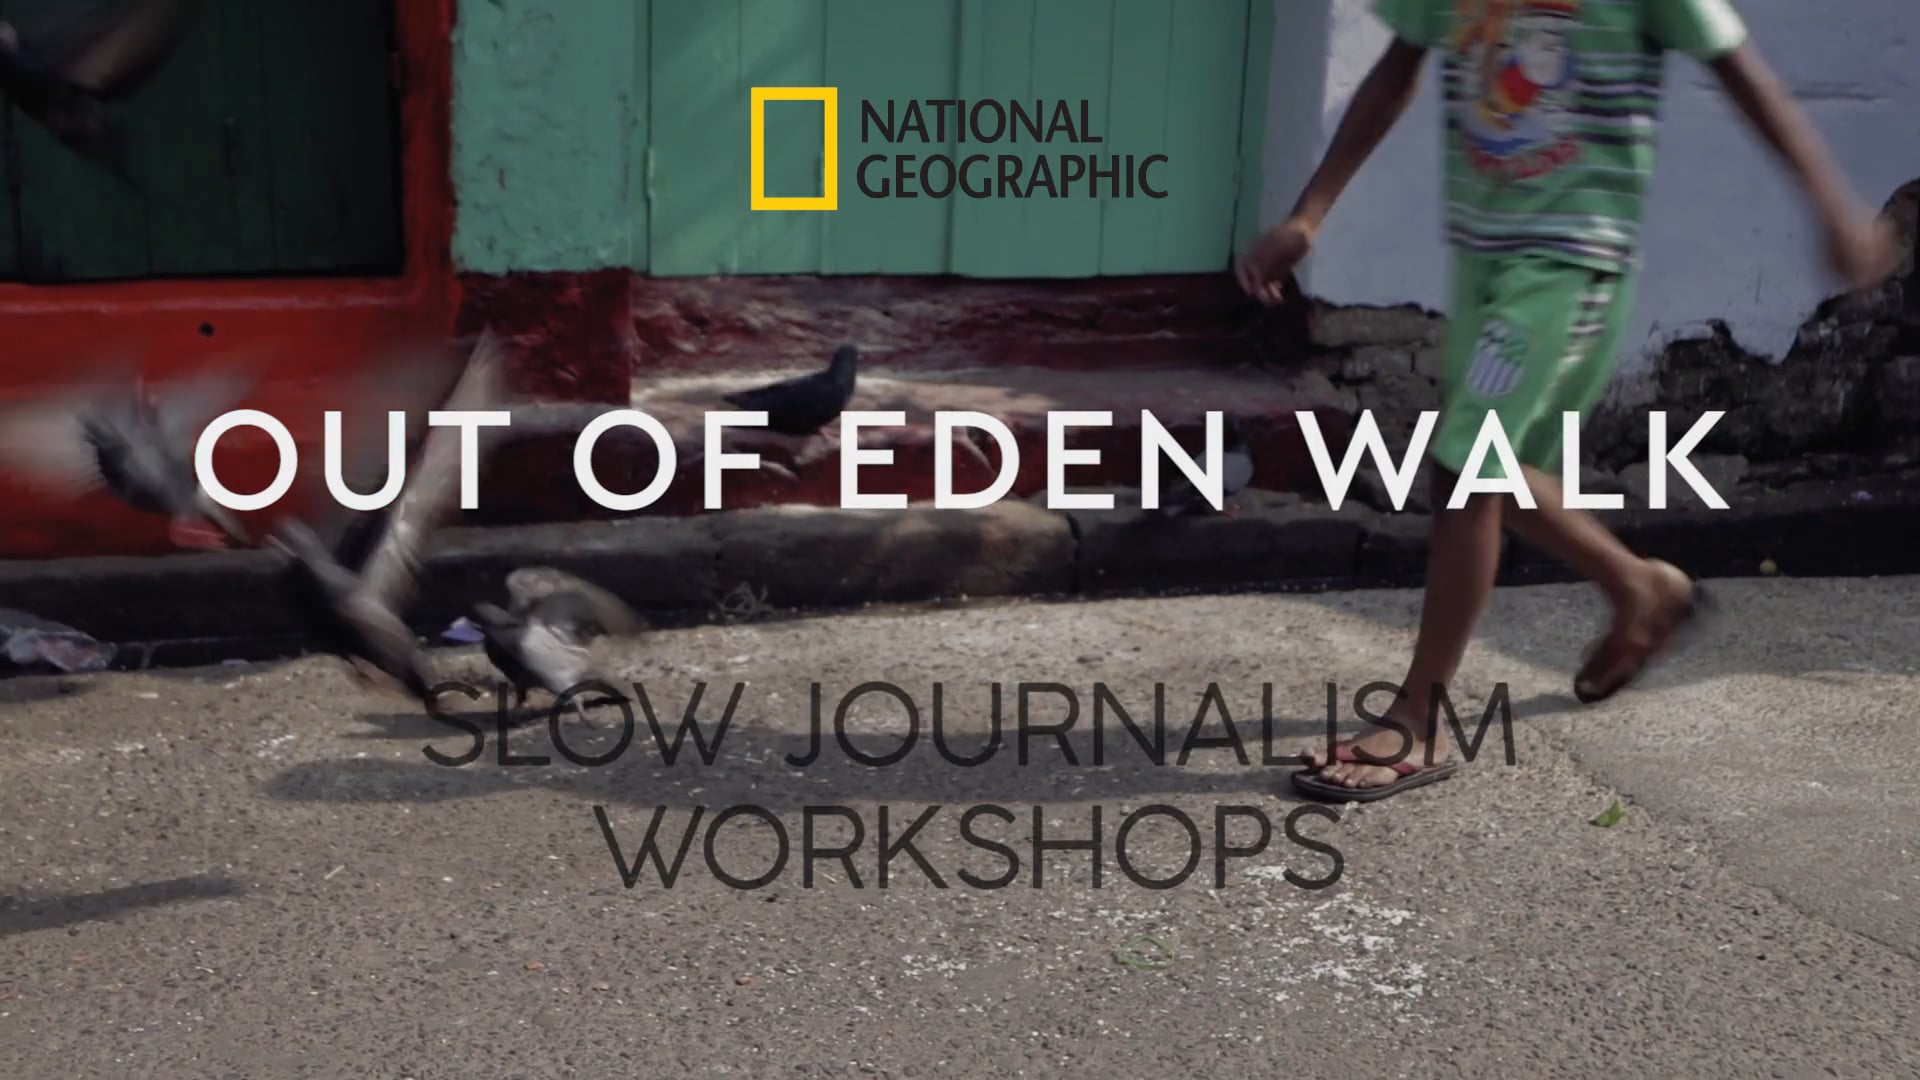 National Geographic Out of Eden Walk Slow Journalism Workshops